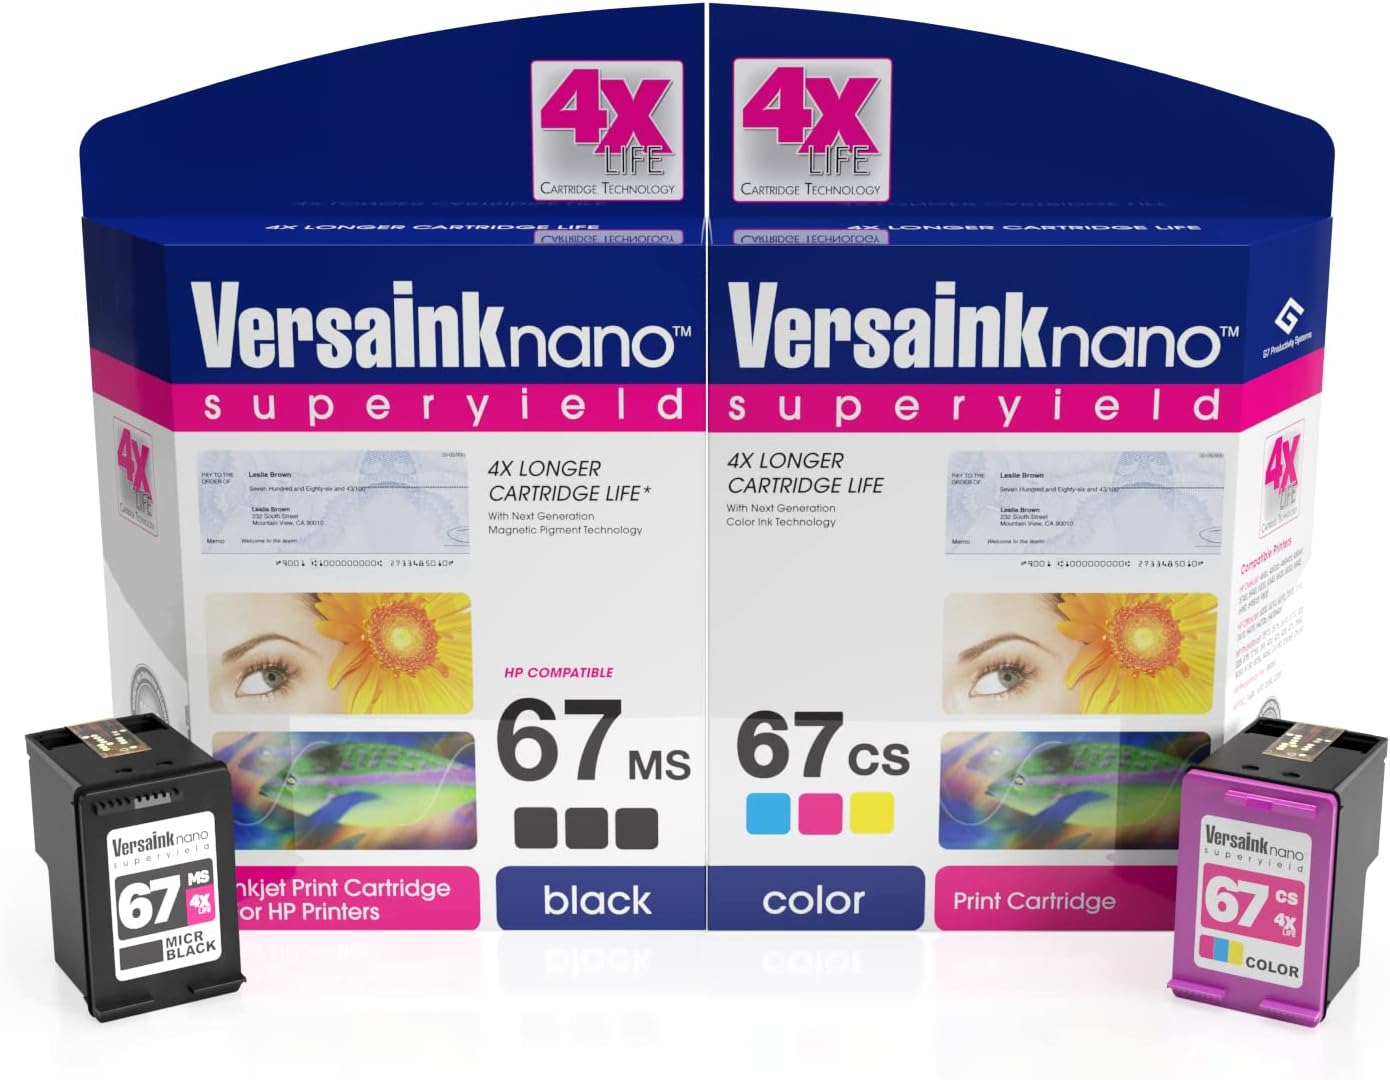 VersaInk-Nano HP 67 MS MICR Black Ink Cartridge for Check Printing & VersaInk...